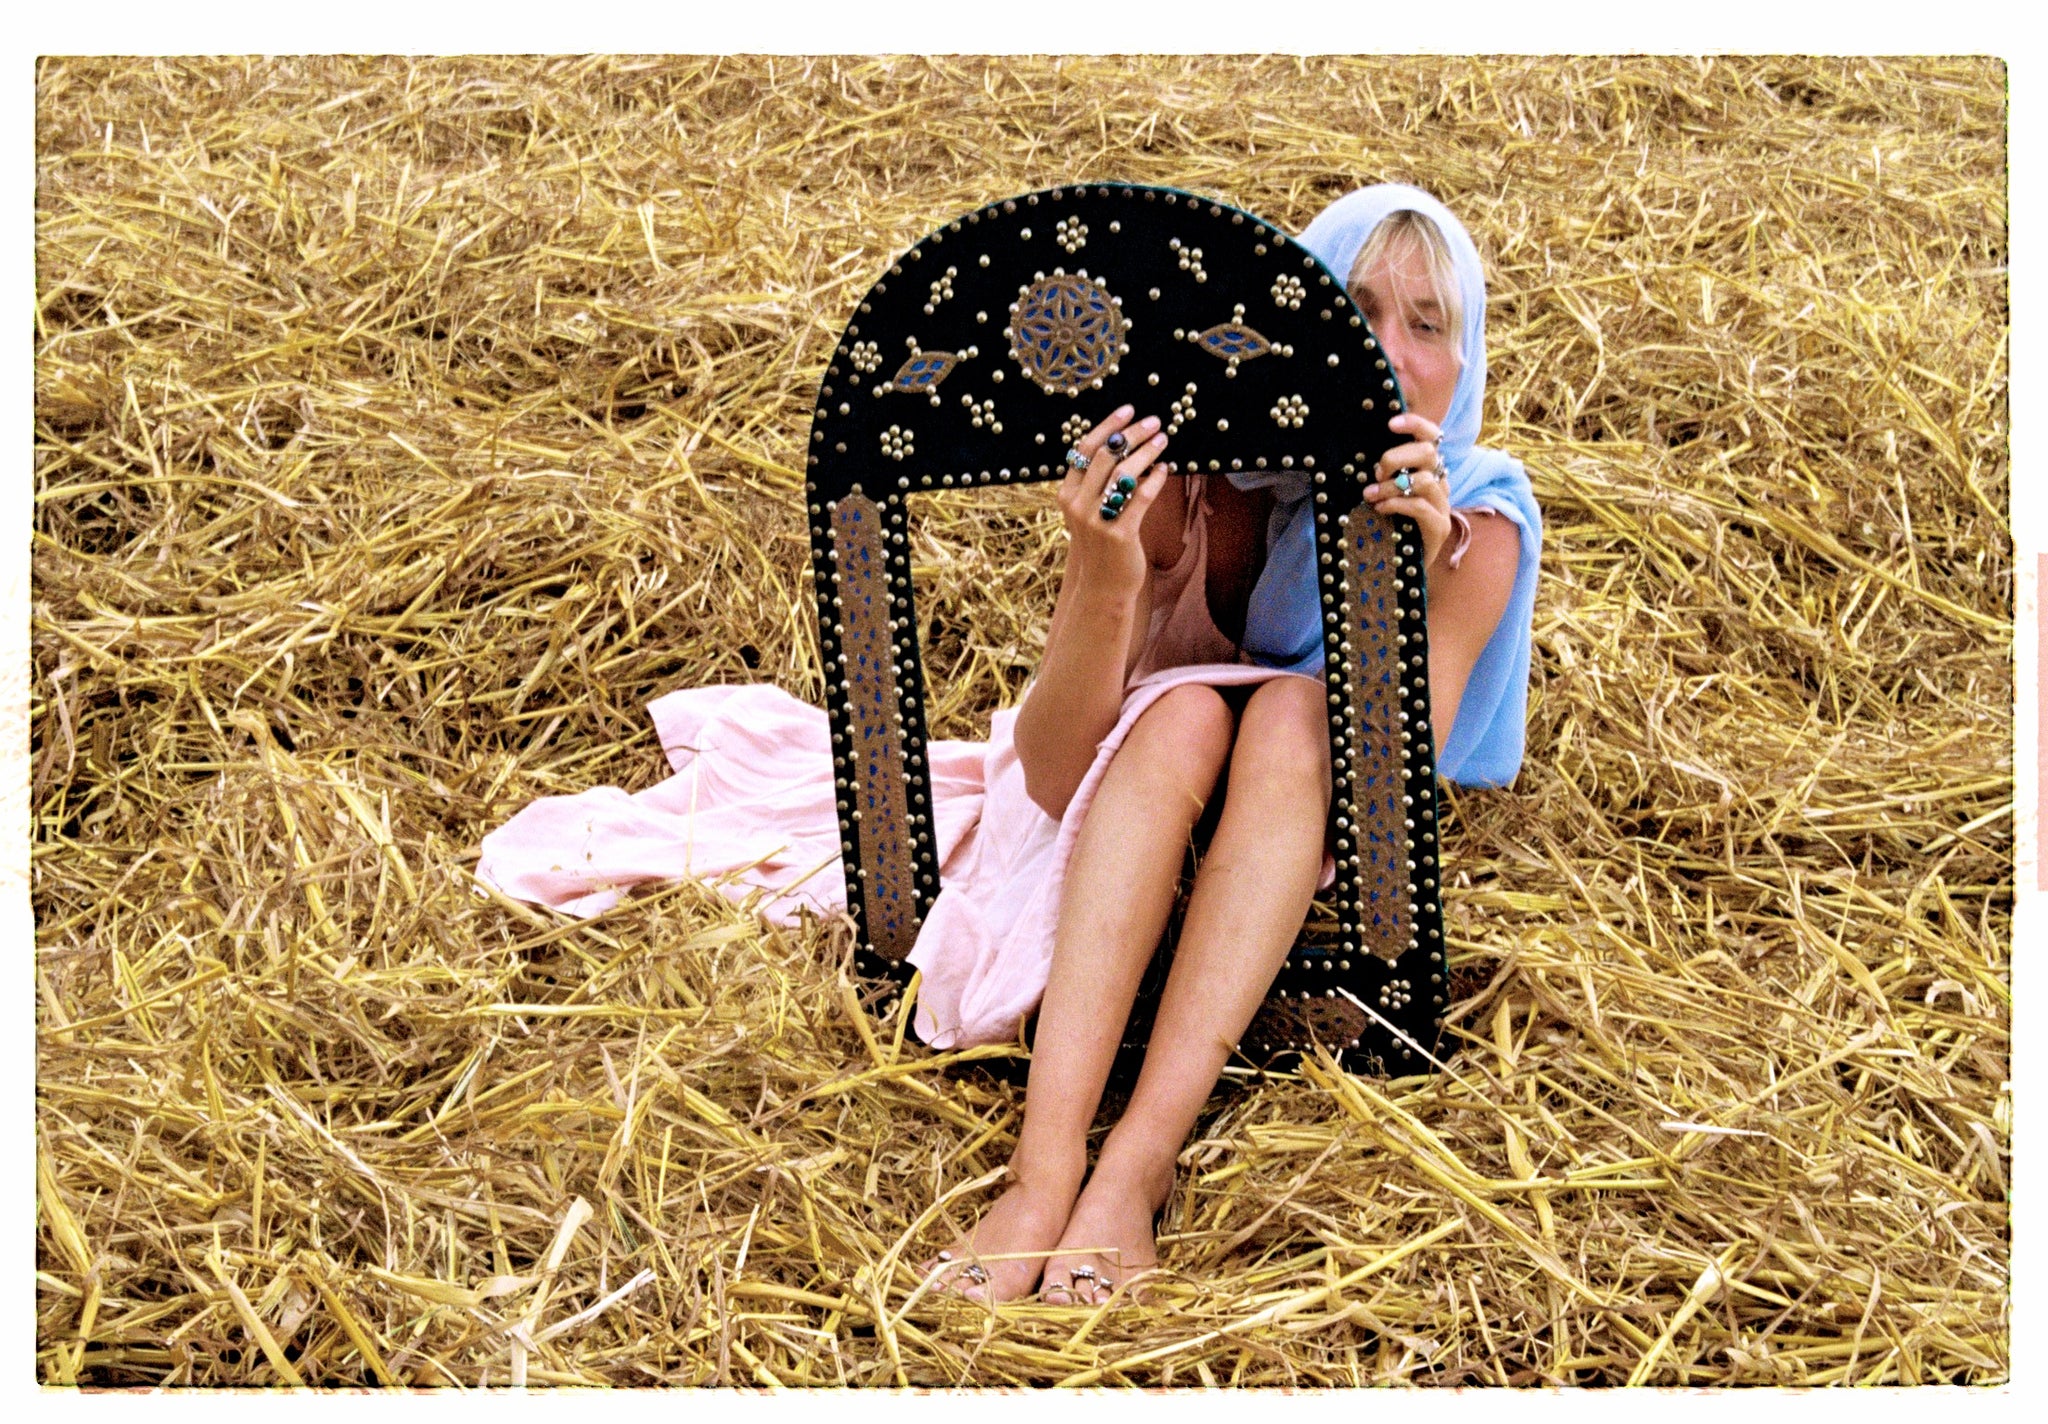 Alice & Lily Photoshoot in a field wearing Silver Jewellery 